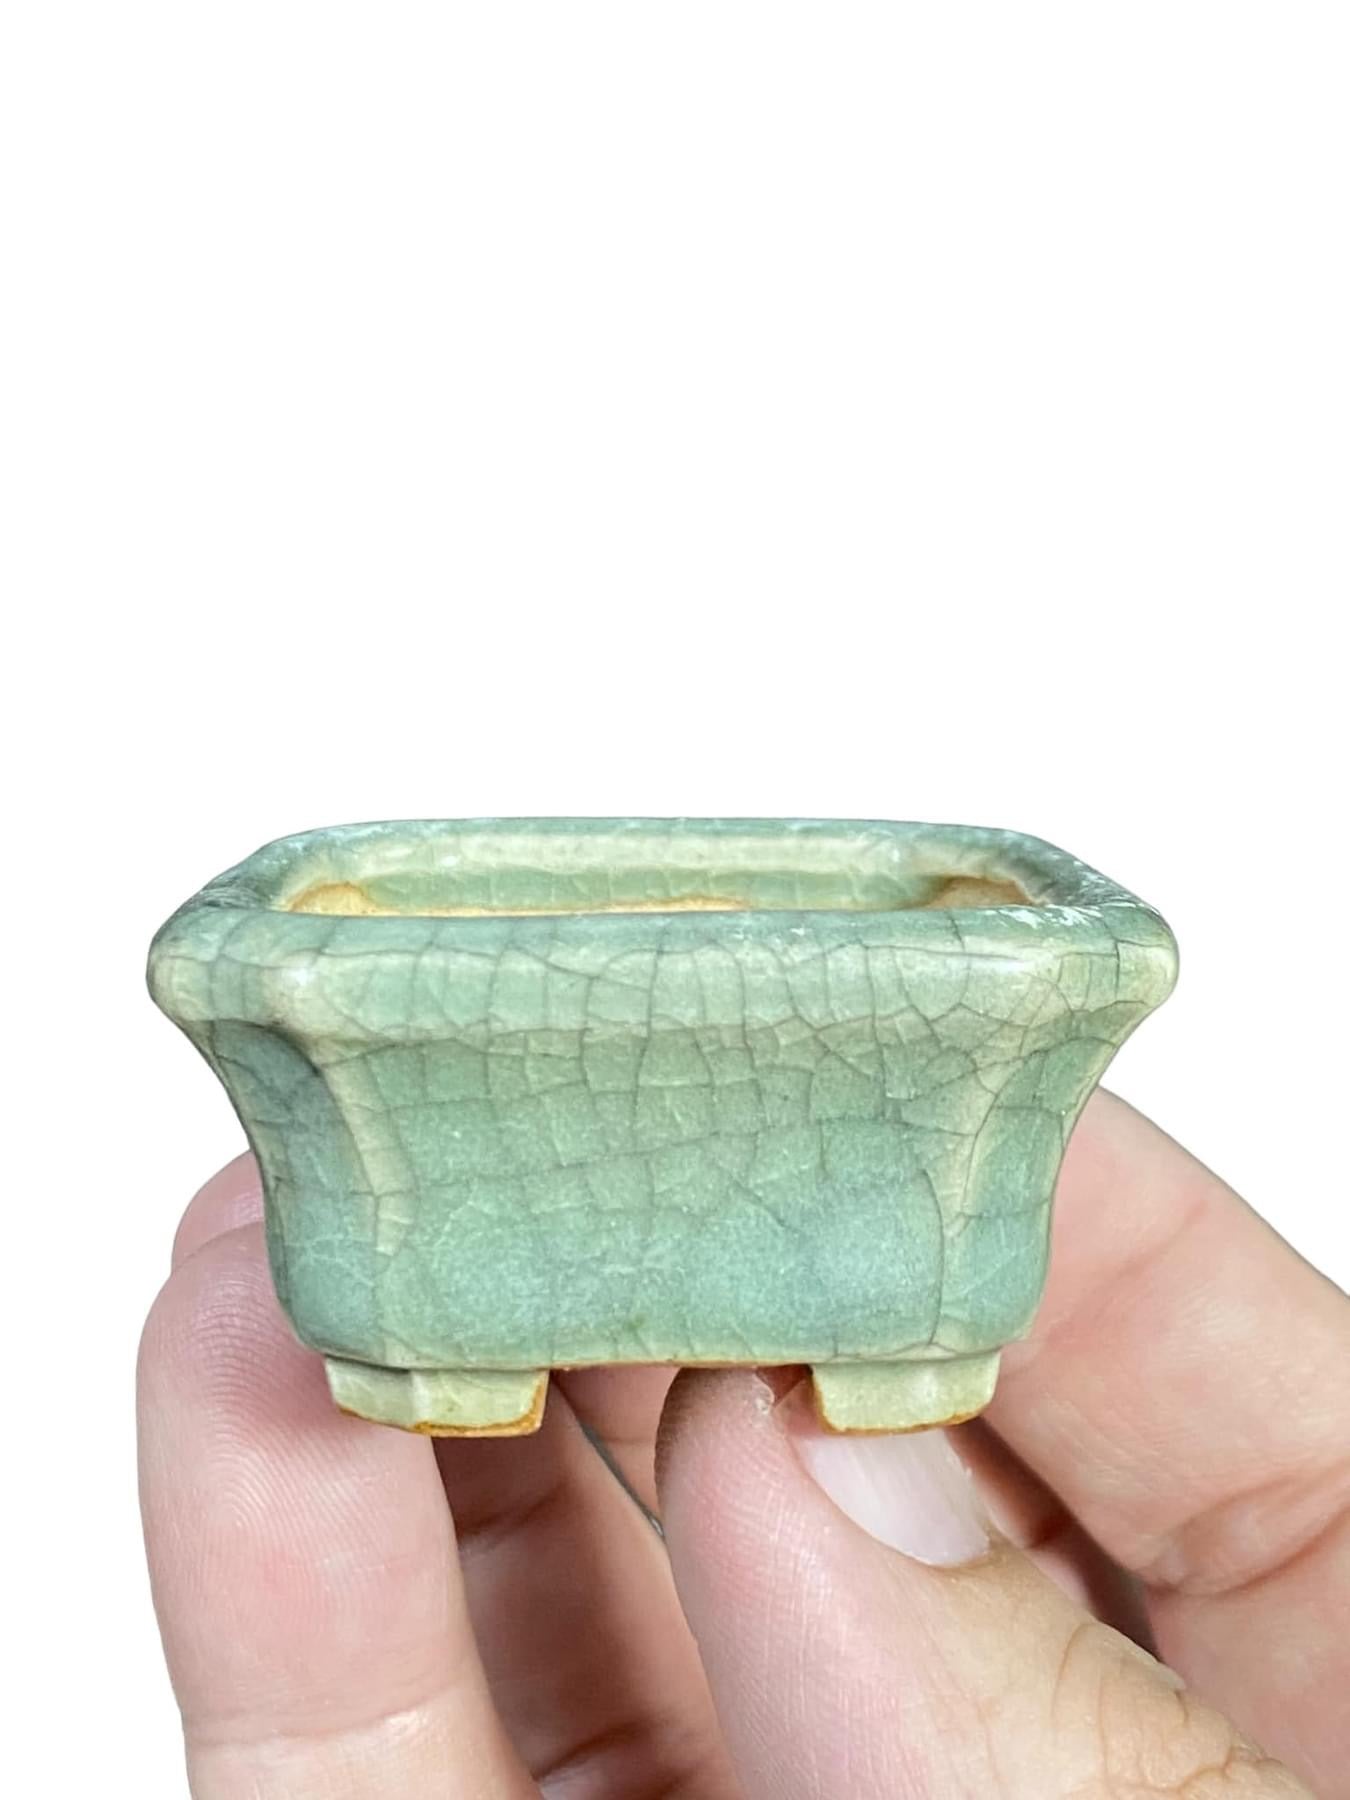 Eimei - Stellar Crackle Glazed Bonsai Pot with Patina (2-3/8” wide)